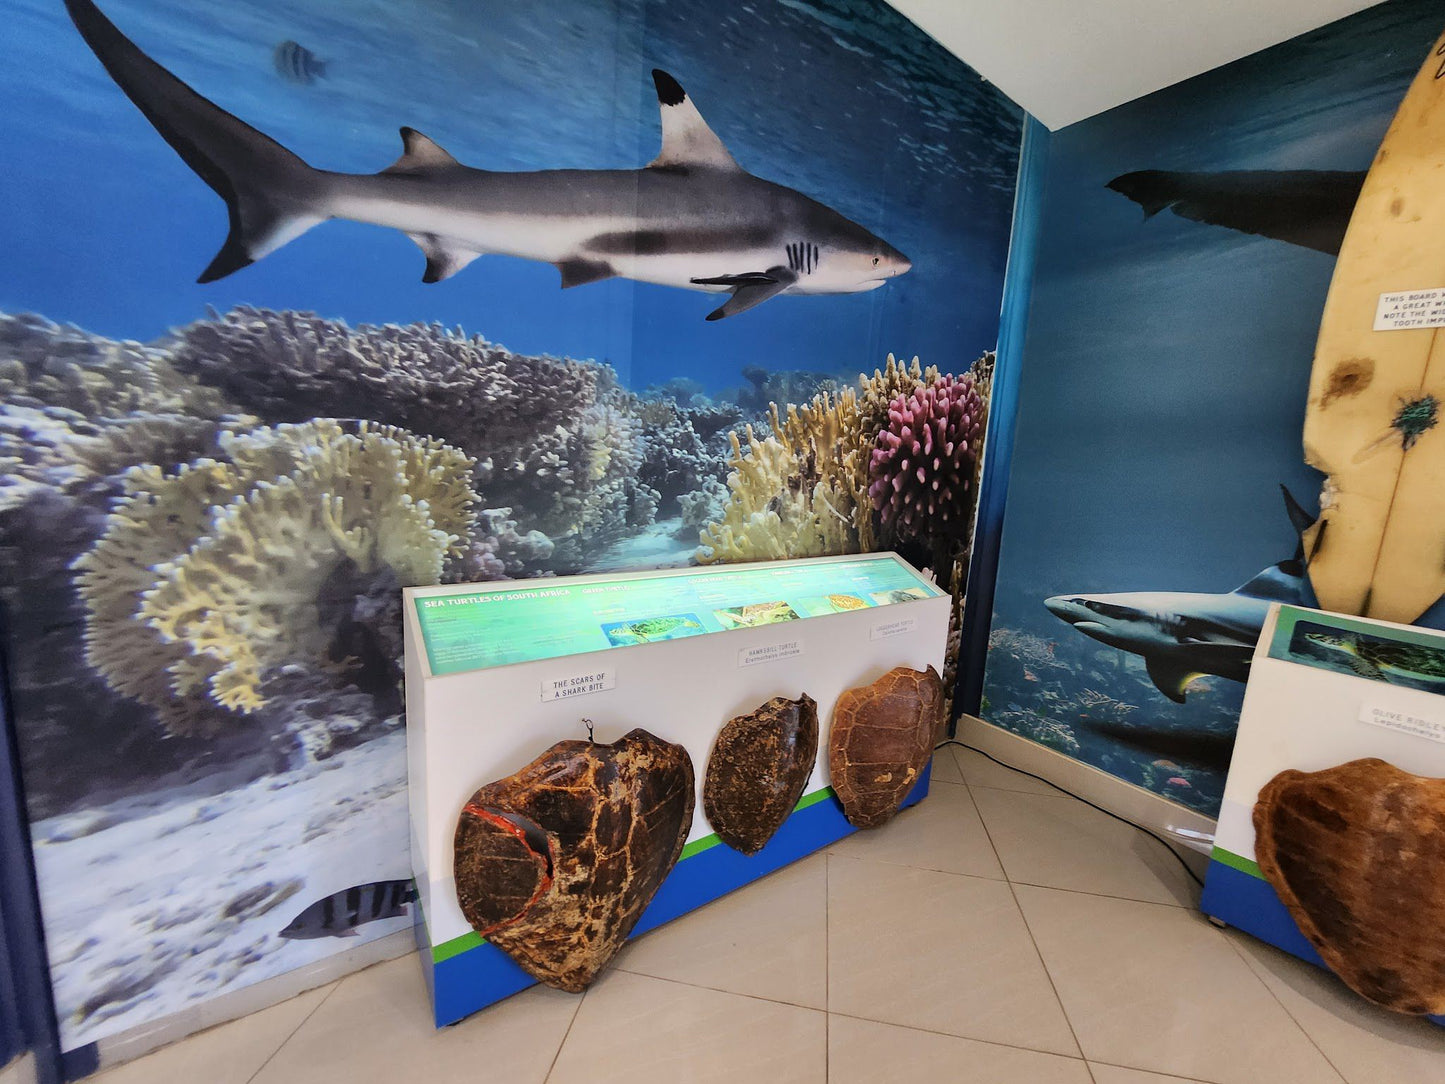  Umhlanga KZN Sharks Board & Conference Centre.